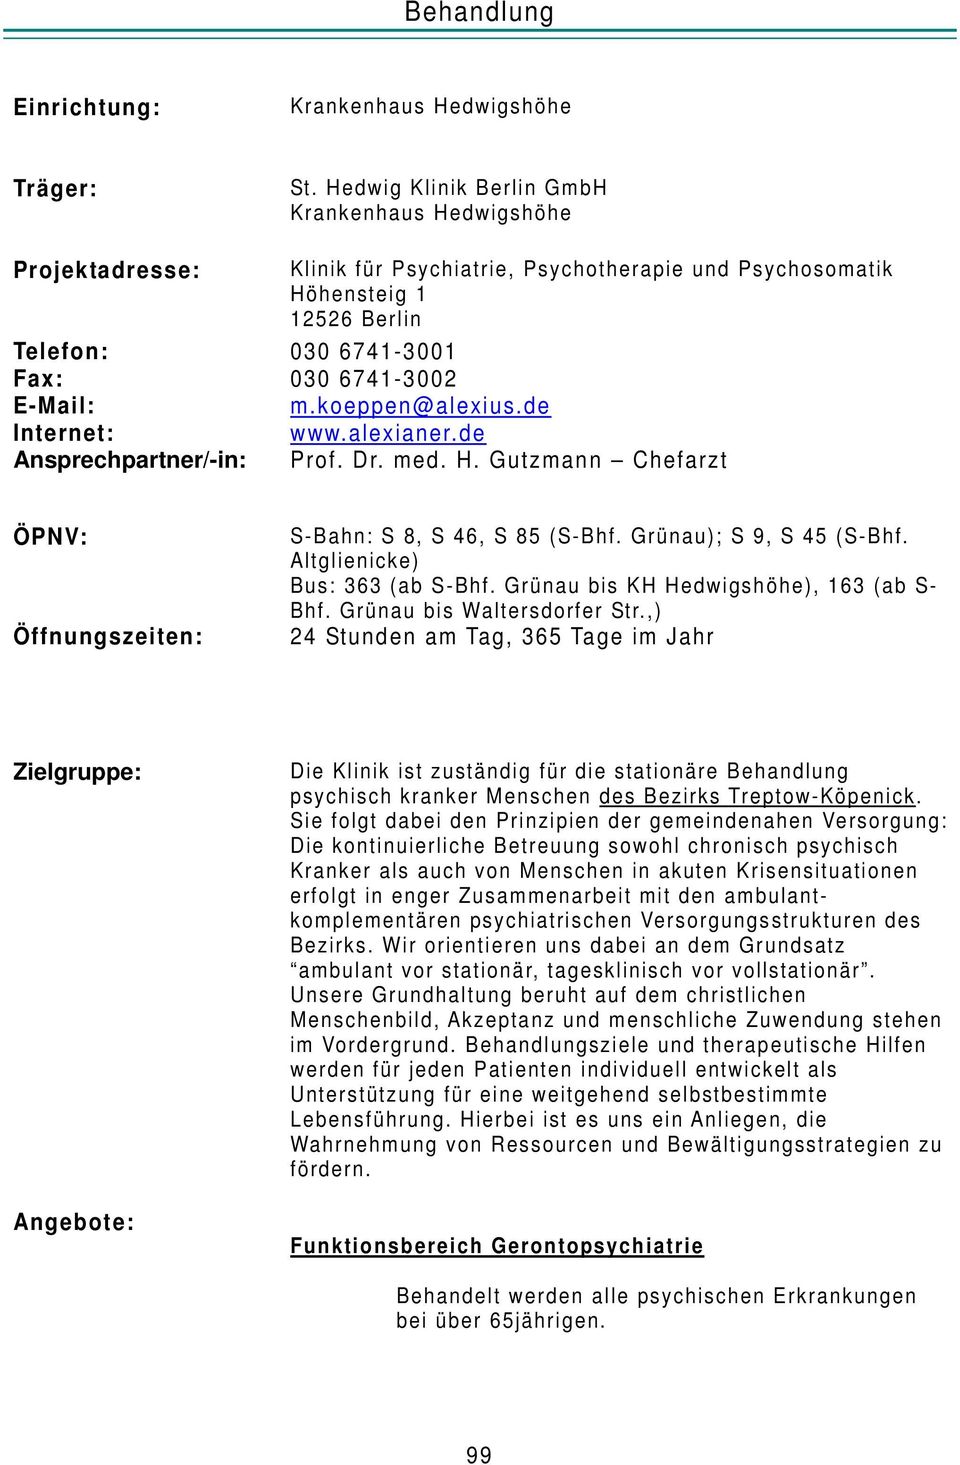 koeppen@alexius.de www.alexianer.de Ansprechpartner/-in: Prof. Dr. med. H. Gutzmann Chefarzt ÖPNV: Öffnungszeiten: S-Bahn: S 8, S 46, S 85 (S-Bhf. Grünau); S 9, S 45 (S-Bhf.